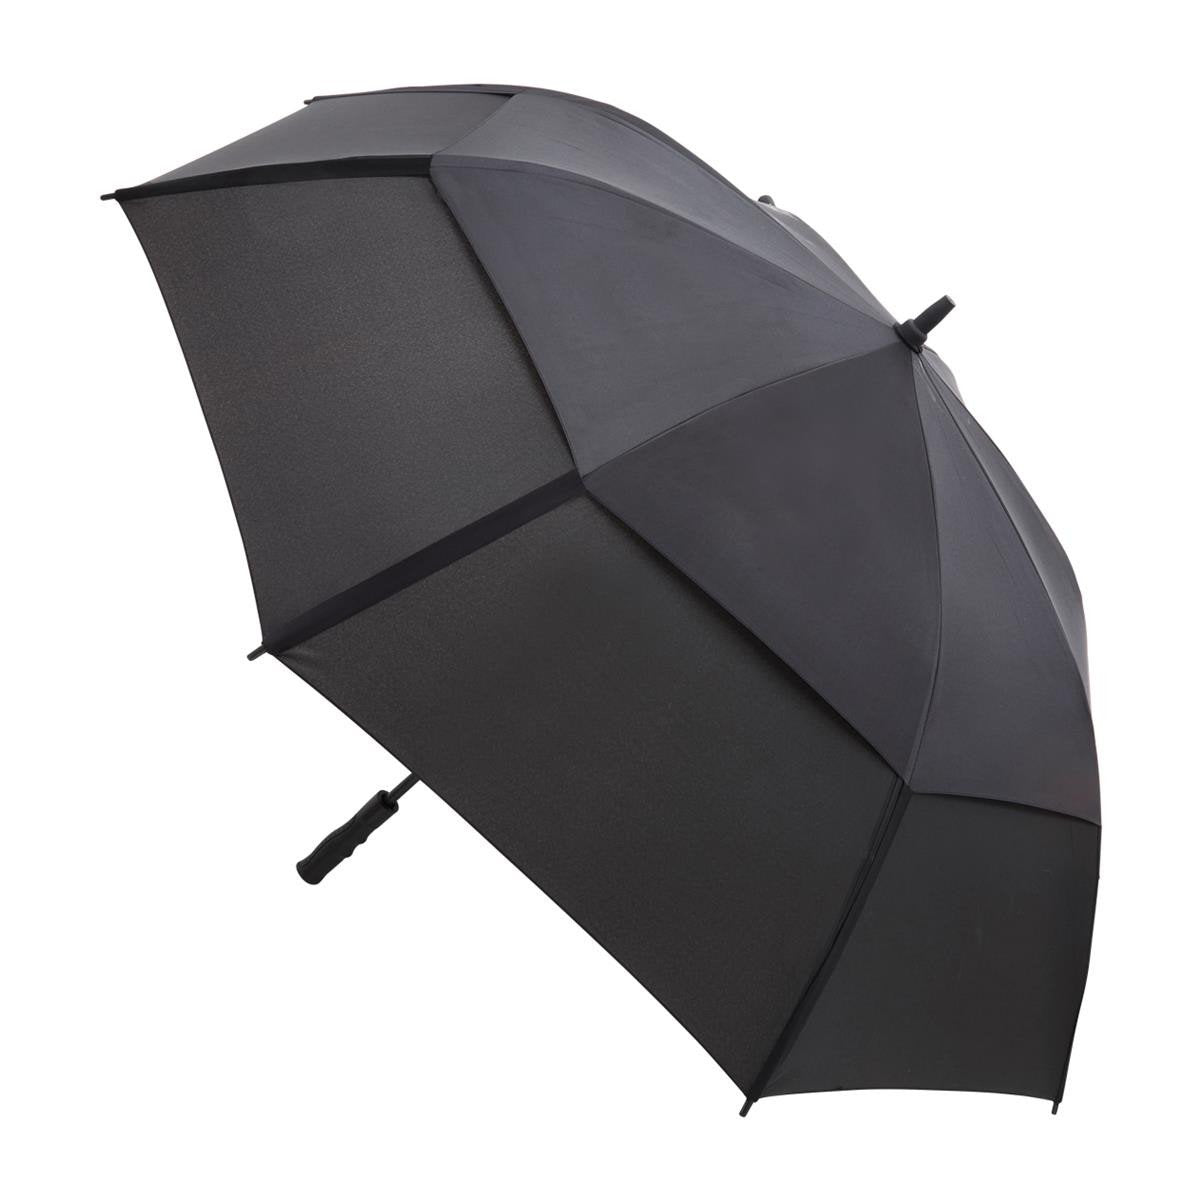 Umbra®️-ultimate-heavy-duty-storm-proof-umbrella-fibreglass-frame-double-layer-wind-vent-system-auto-open-black